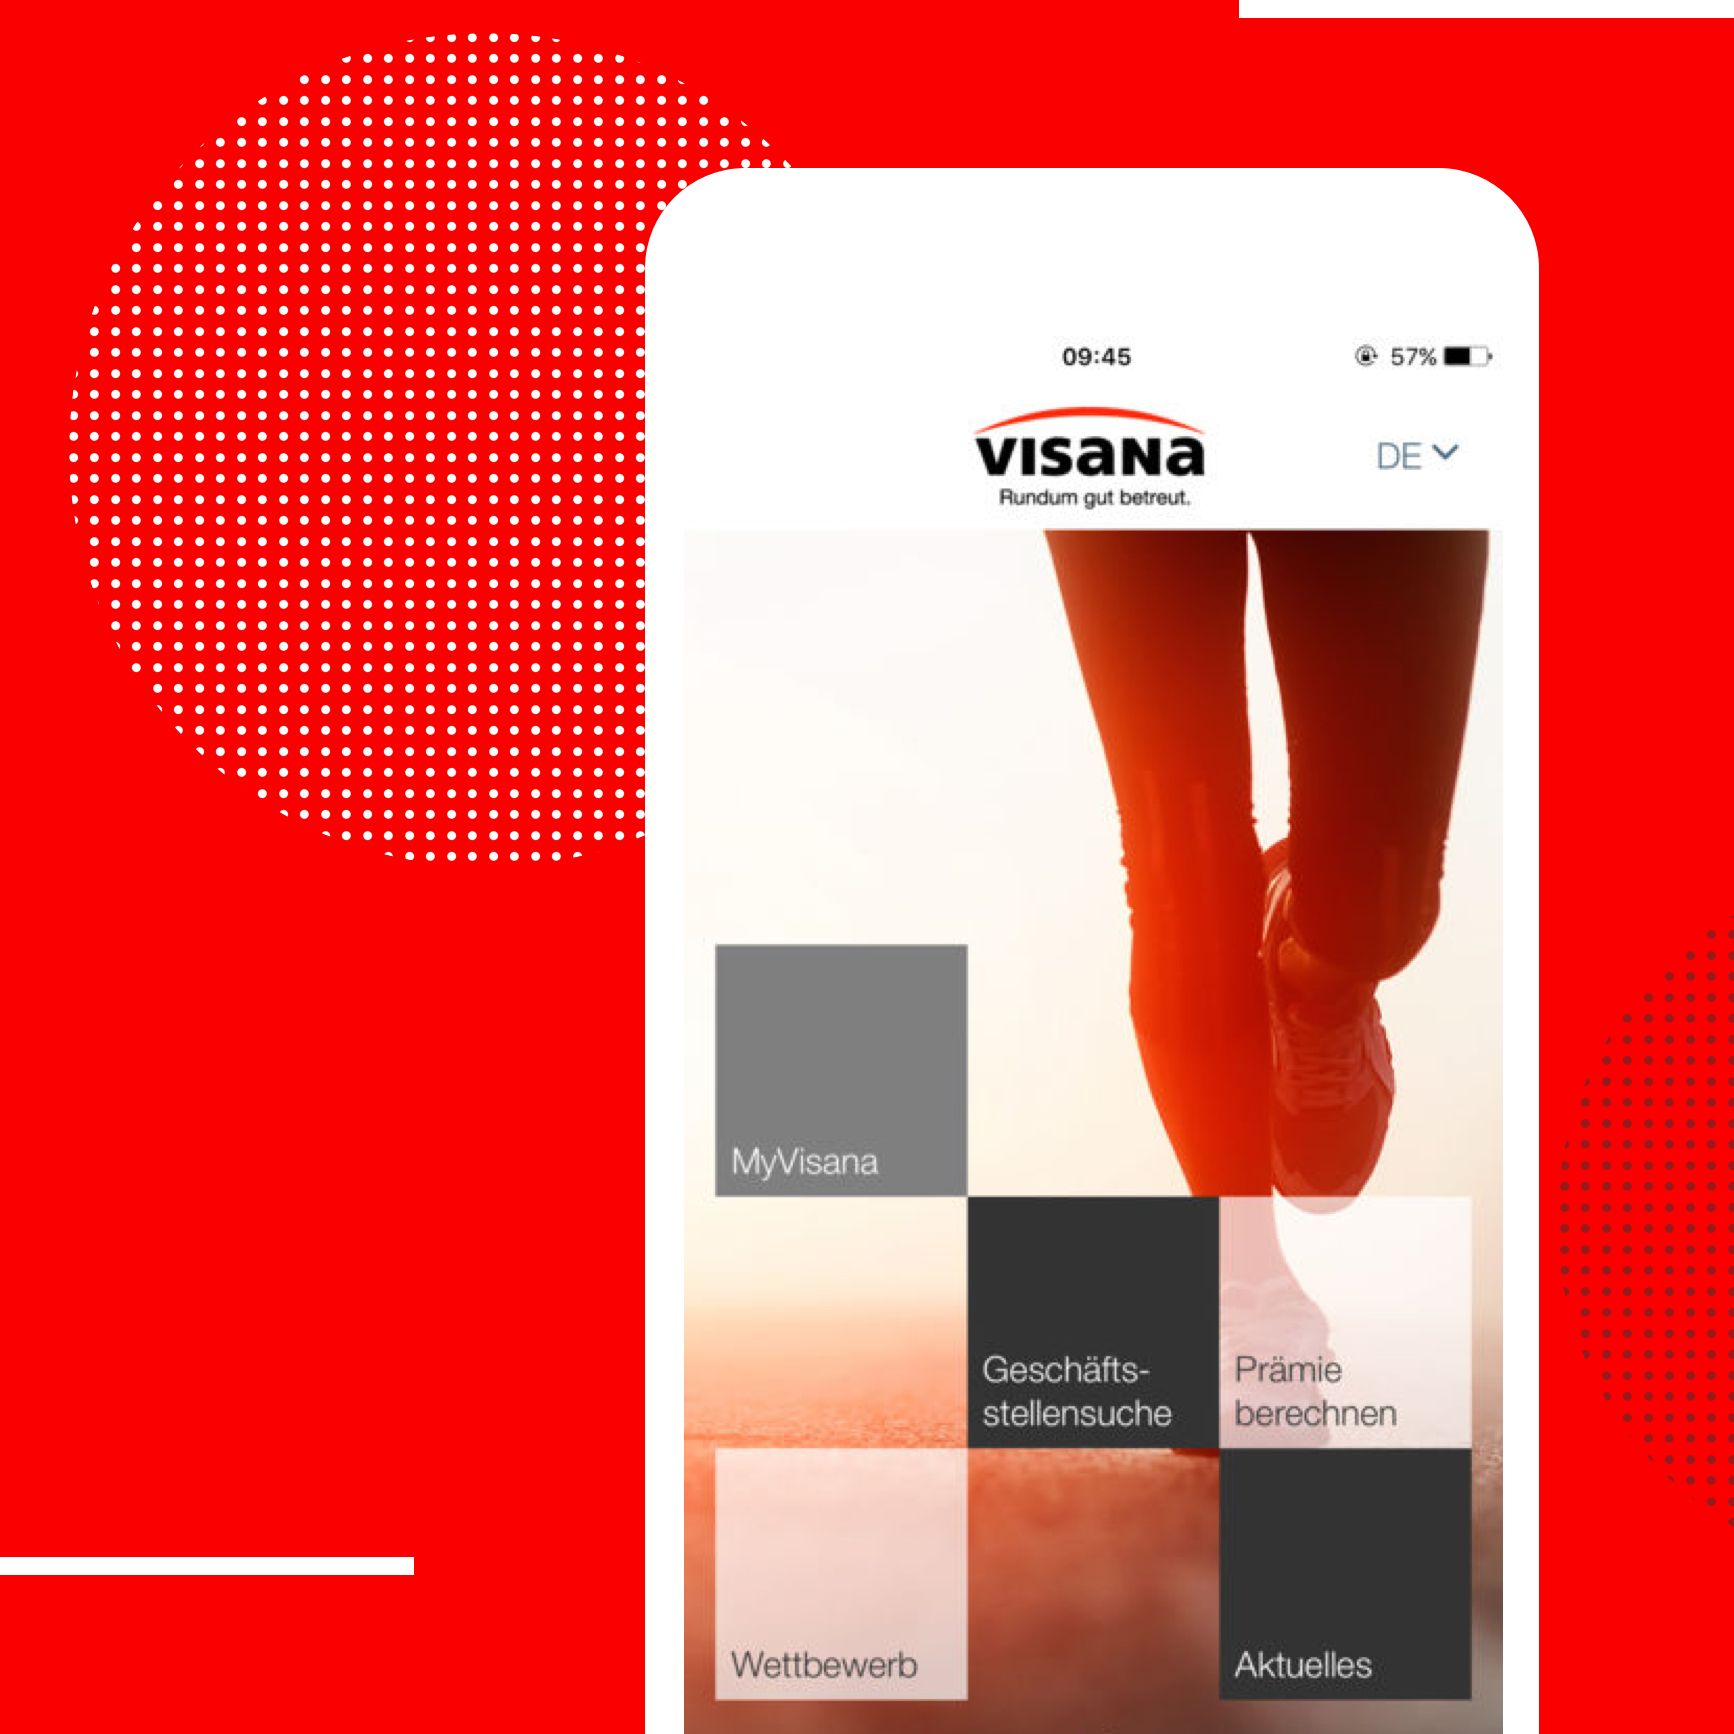 Visana Stagebild mobile view